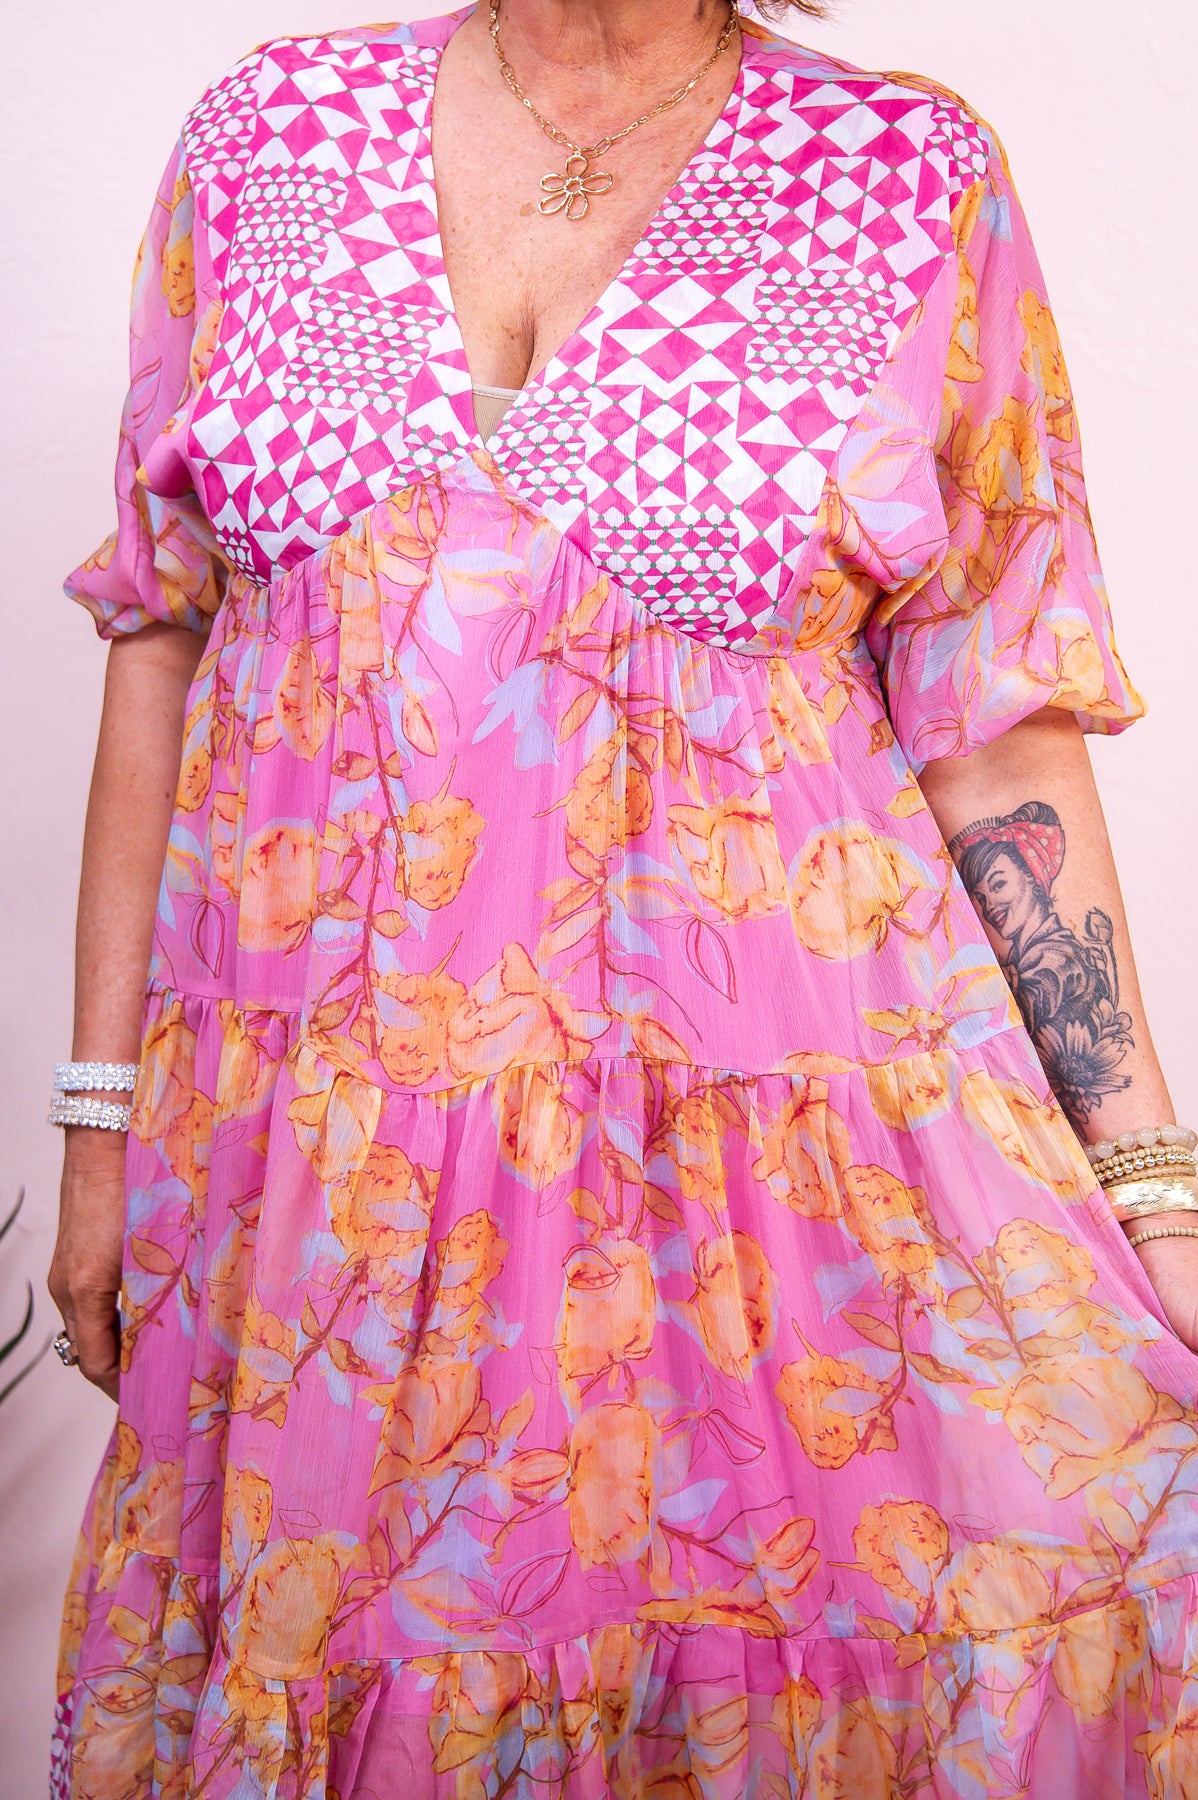 Floral Frenzy Pink/Multi Color Floral Sheer Dress - D5263PK